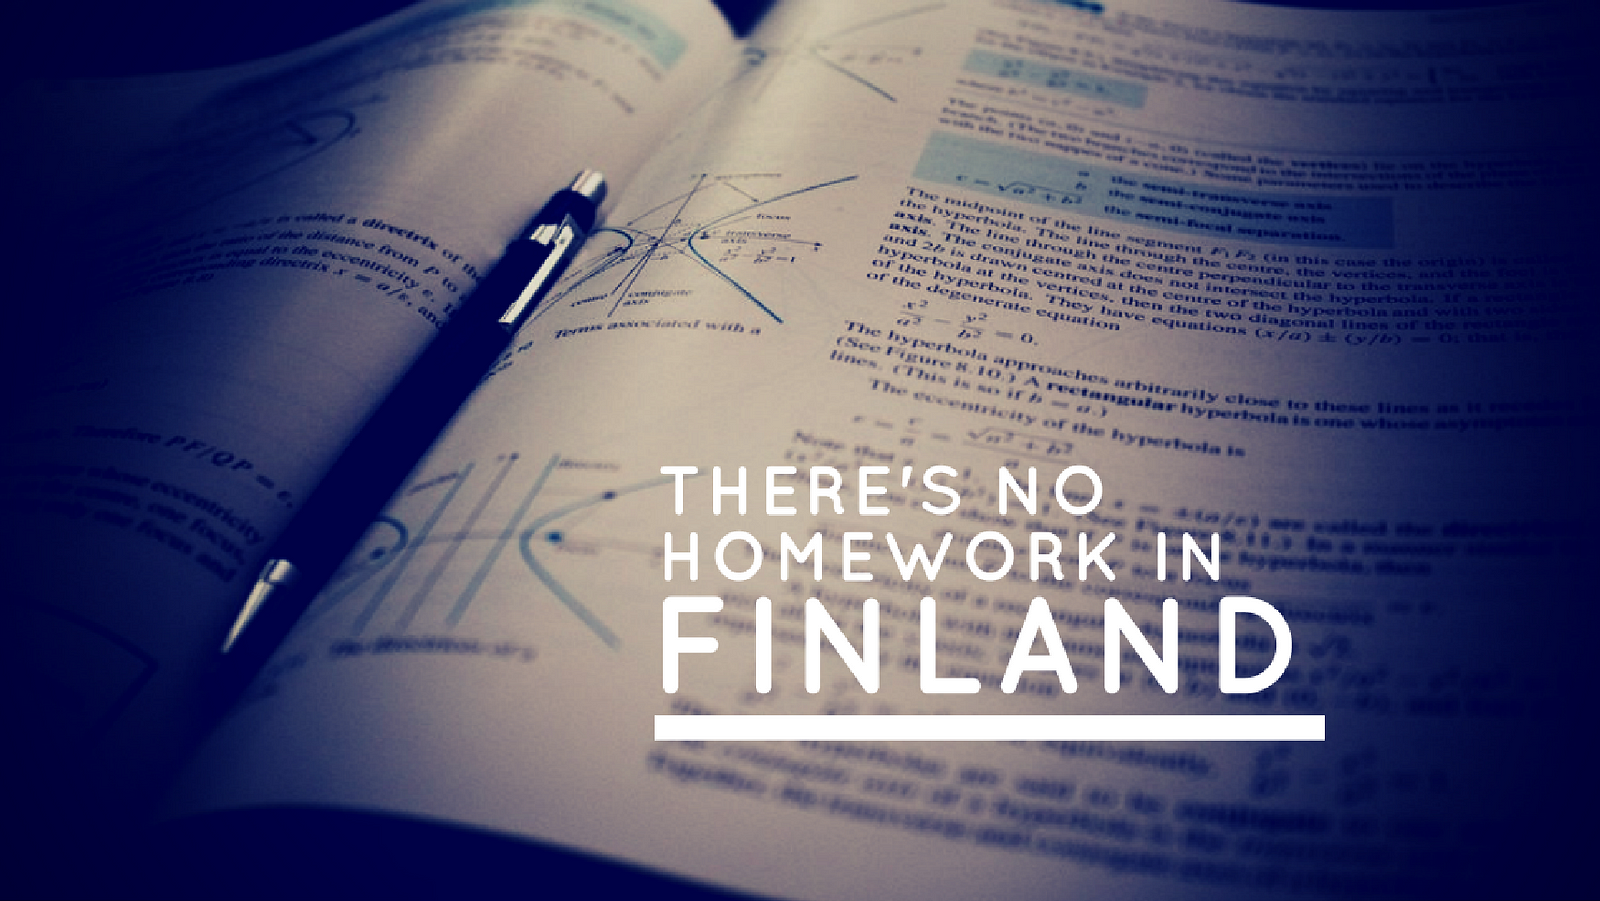 finland bans homework